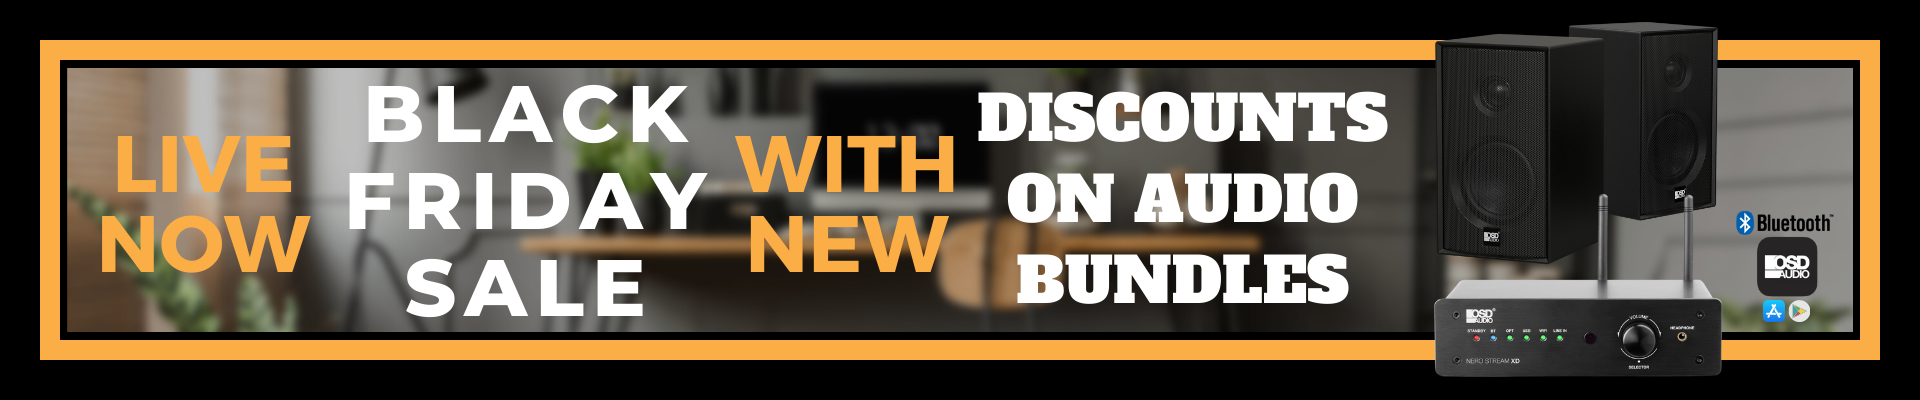 Black Friday Audio Bundles on Sale Banner. Discounts on Audio Bundles